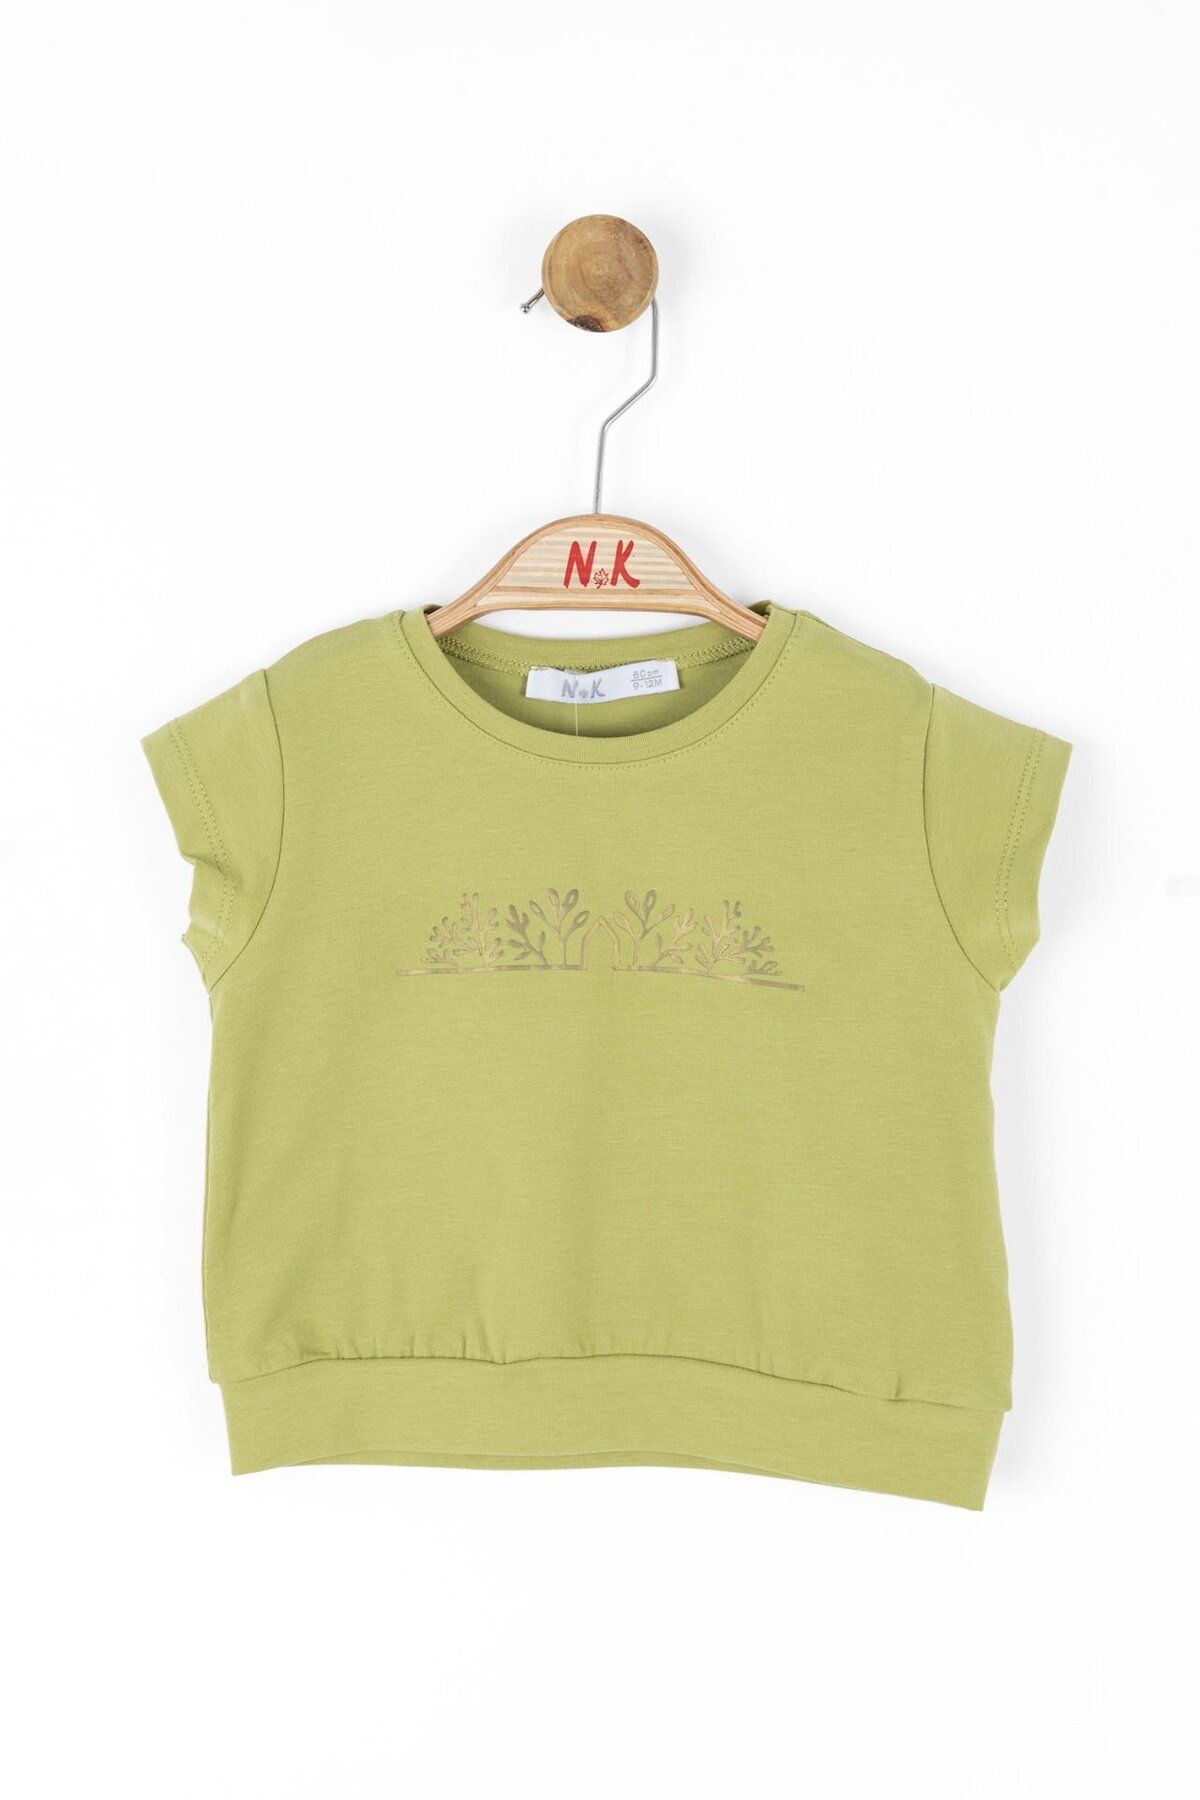 Nk Kids Nk Yeşil Bahçe T-Shirt  (1-4 Size)